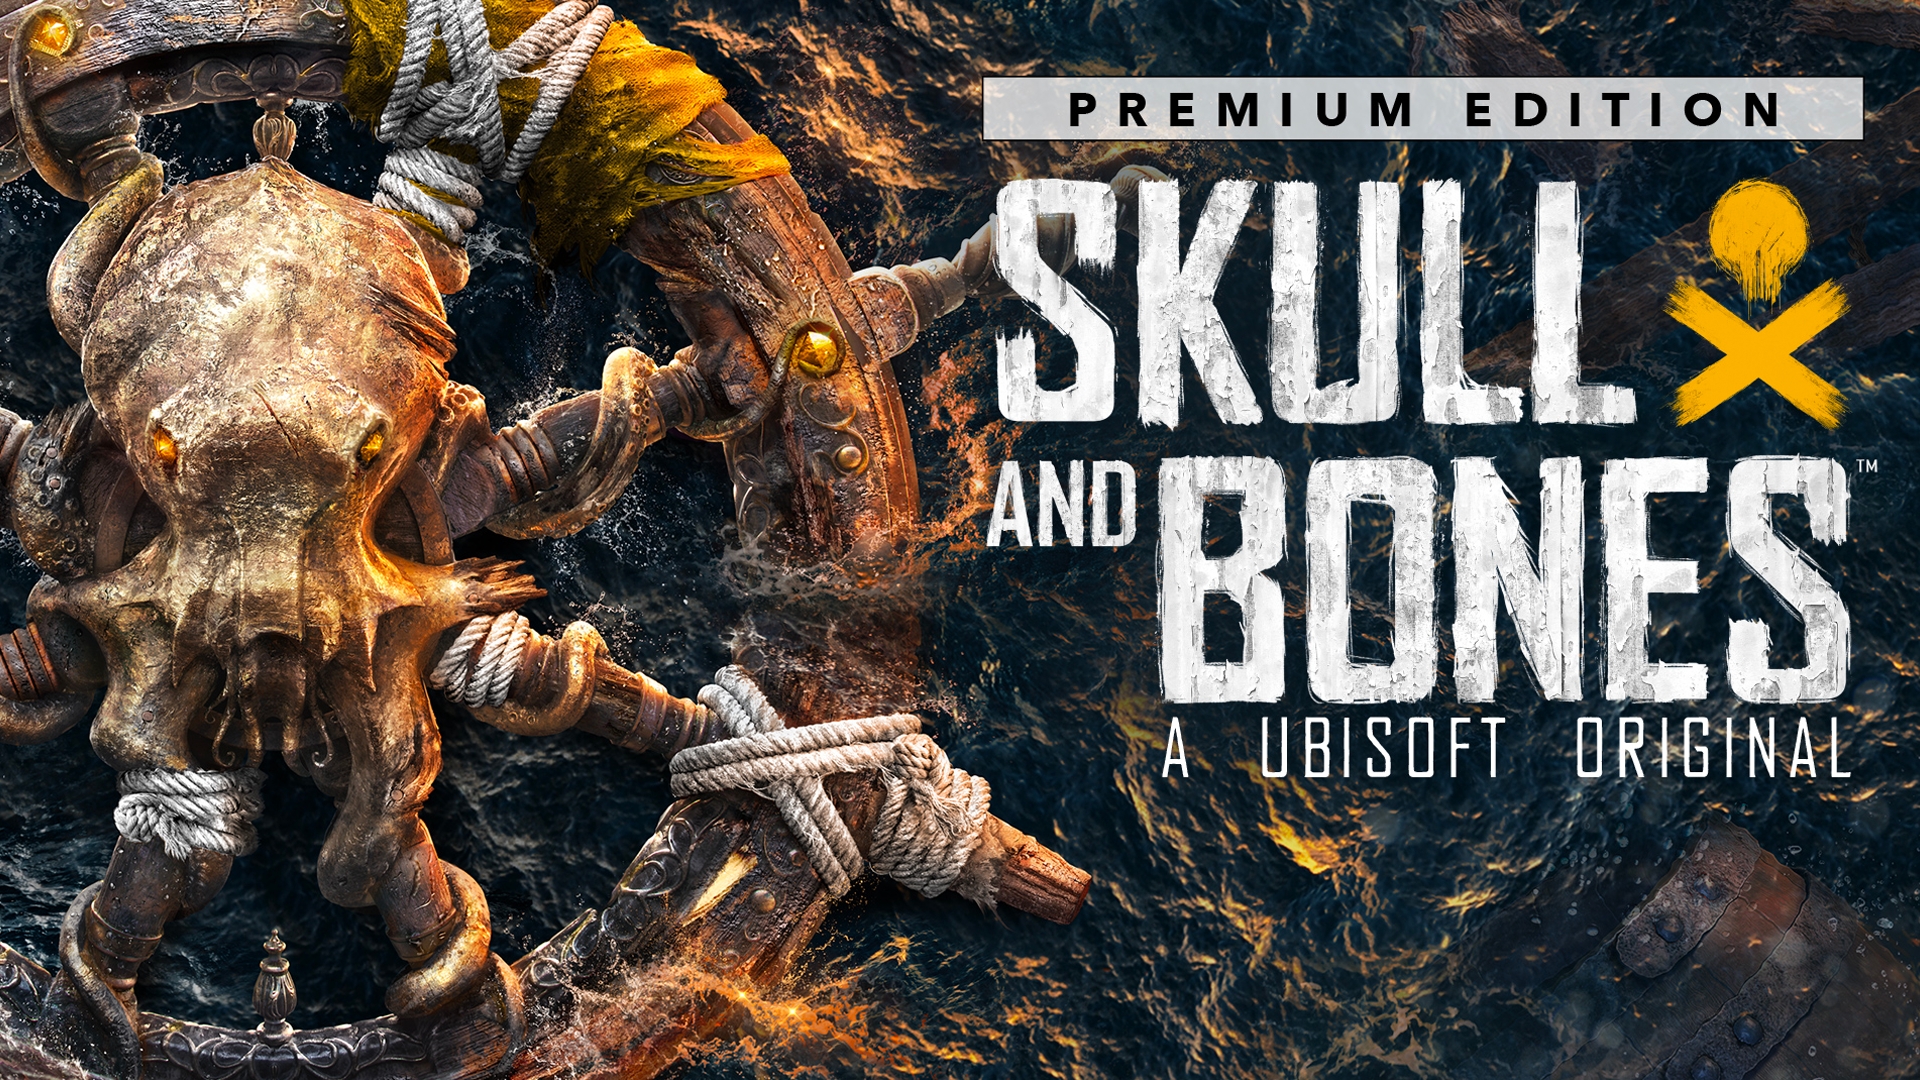  Skull and Bones - Standard Edition, Xbox Series X : Ubisoft:  Video Games